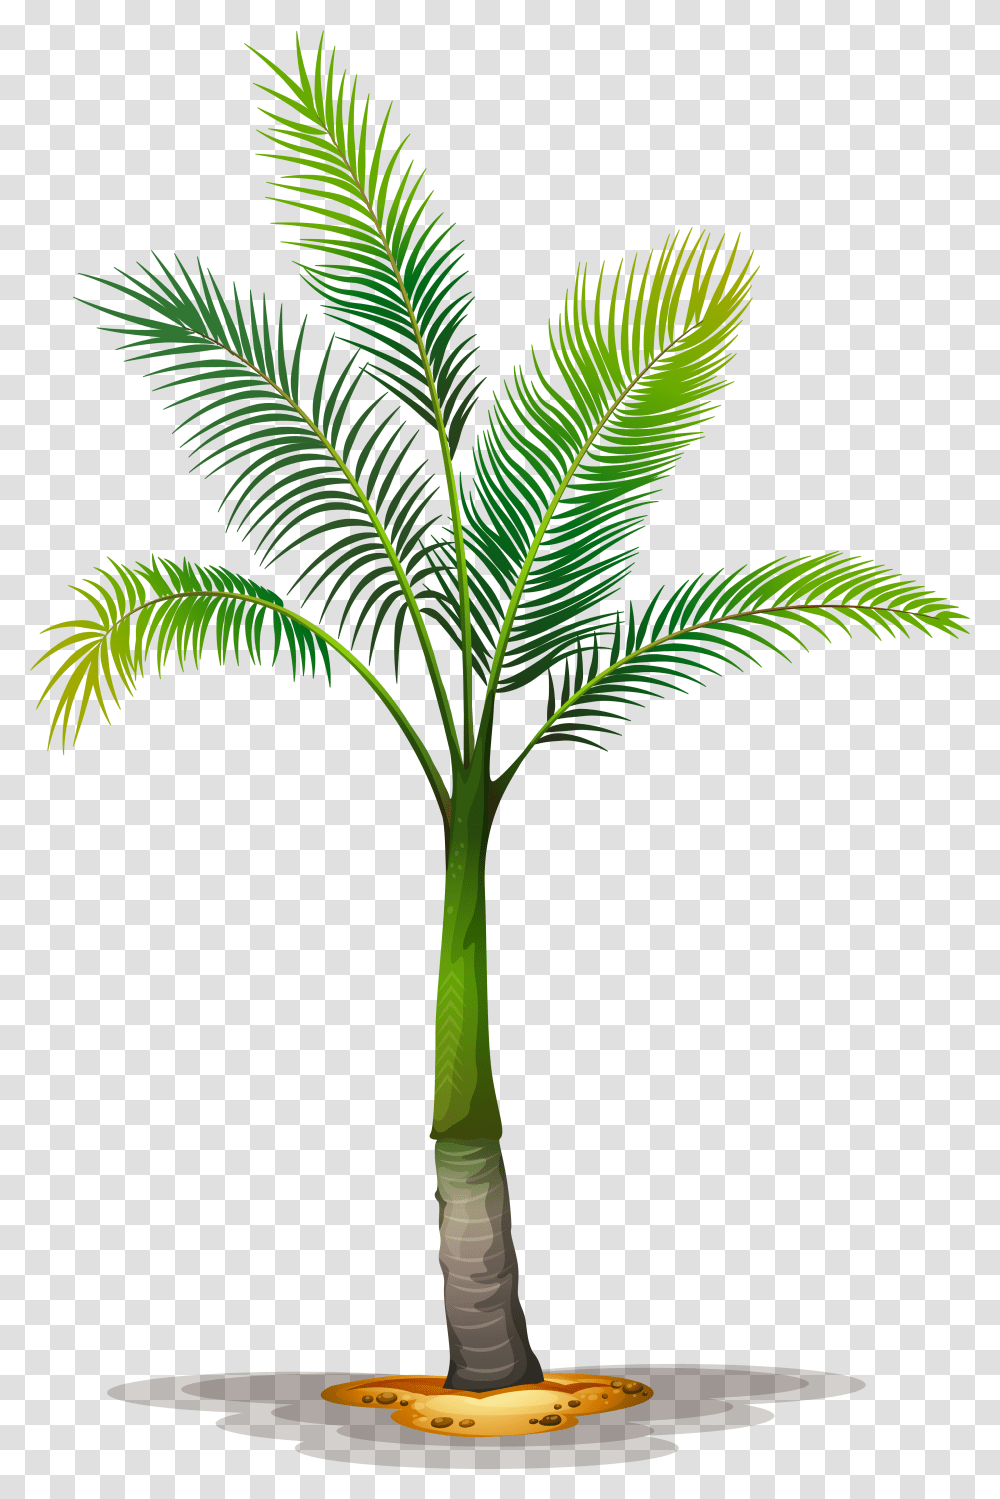 Tree Planting Trees To Plant Palm Palm Tree Green Stem, Leaf, Bird, Animal, Arecaceae Transparent Png